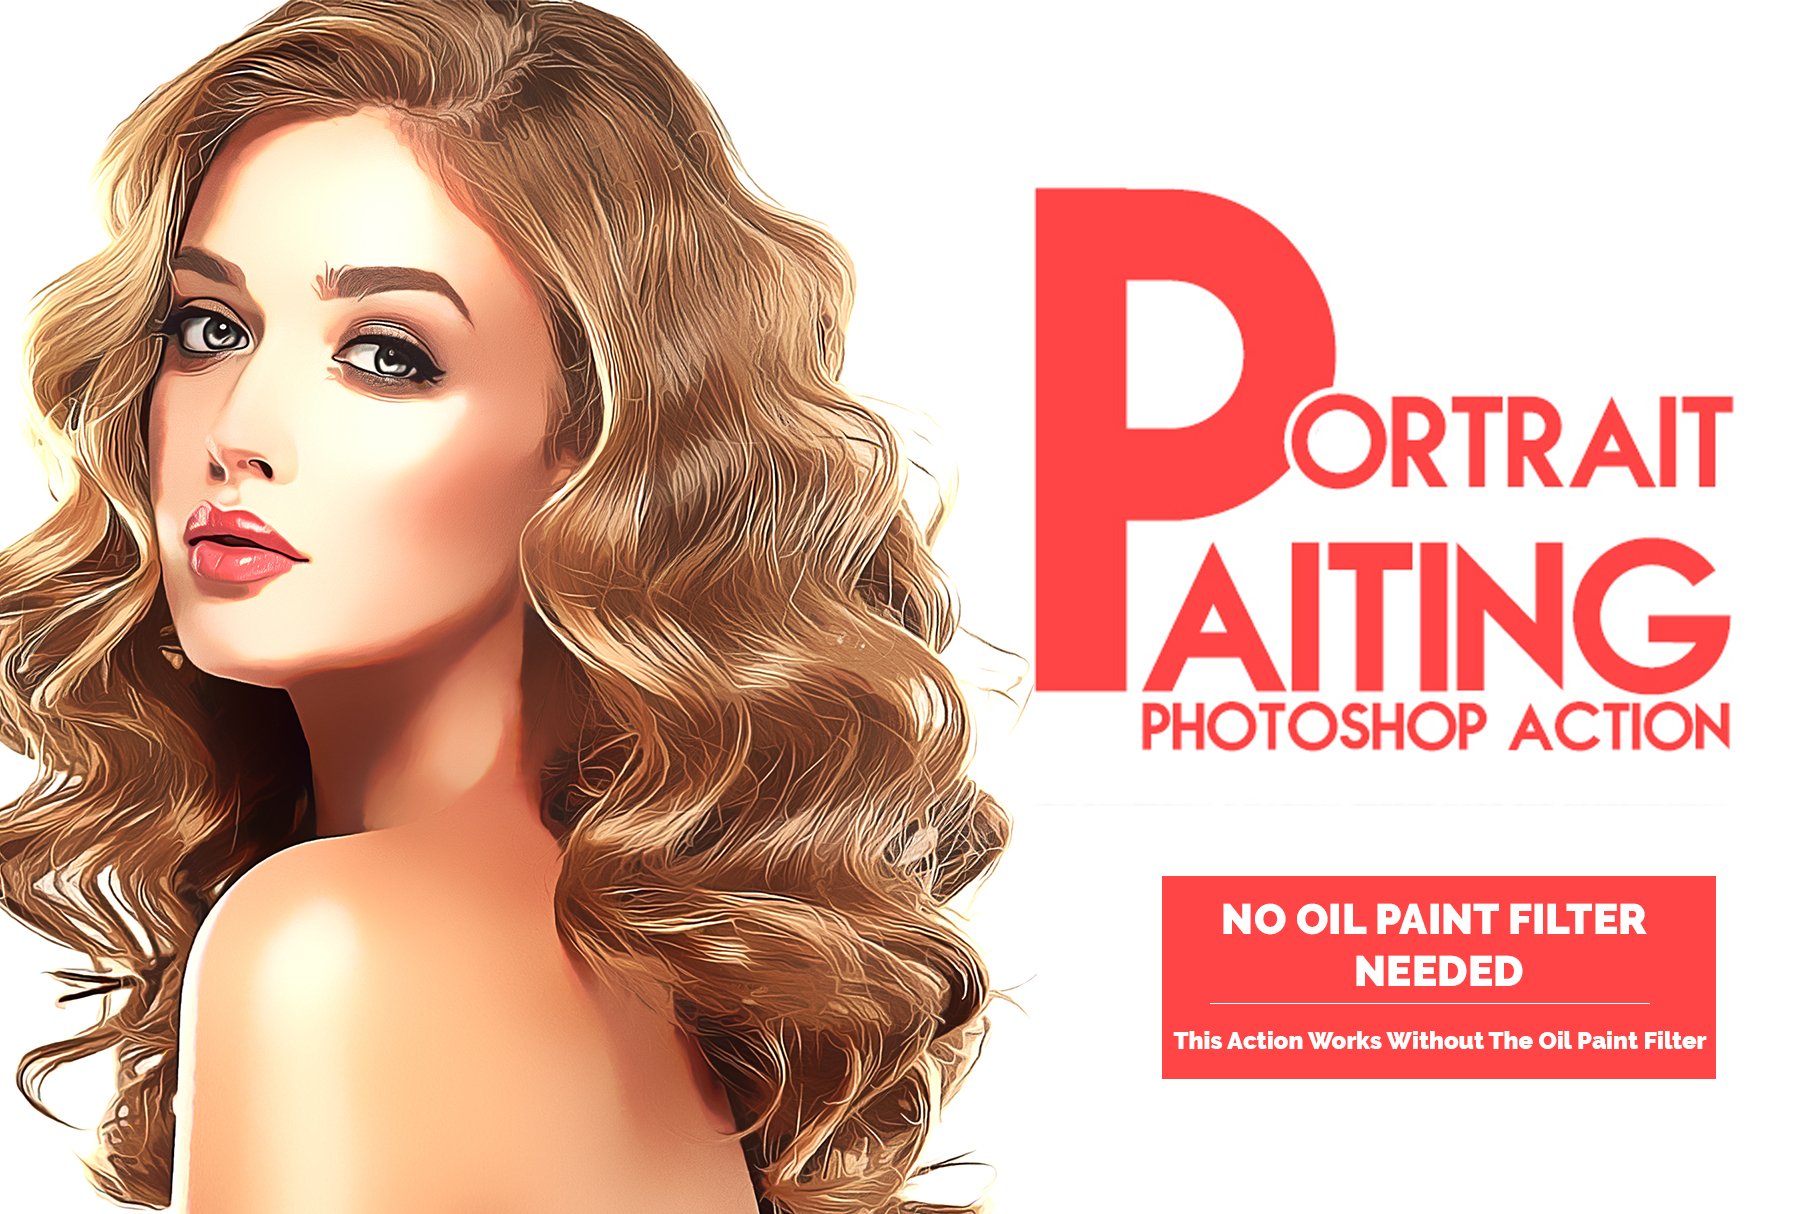 Portrait Painting Photoshop Actioncover image.